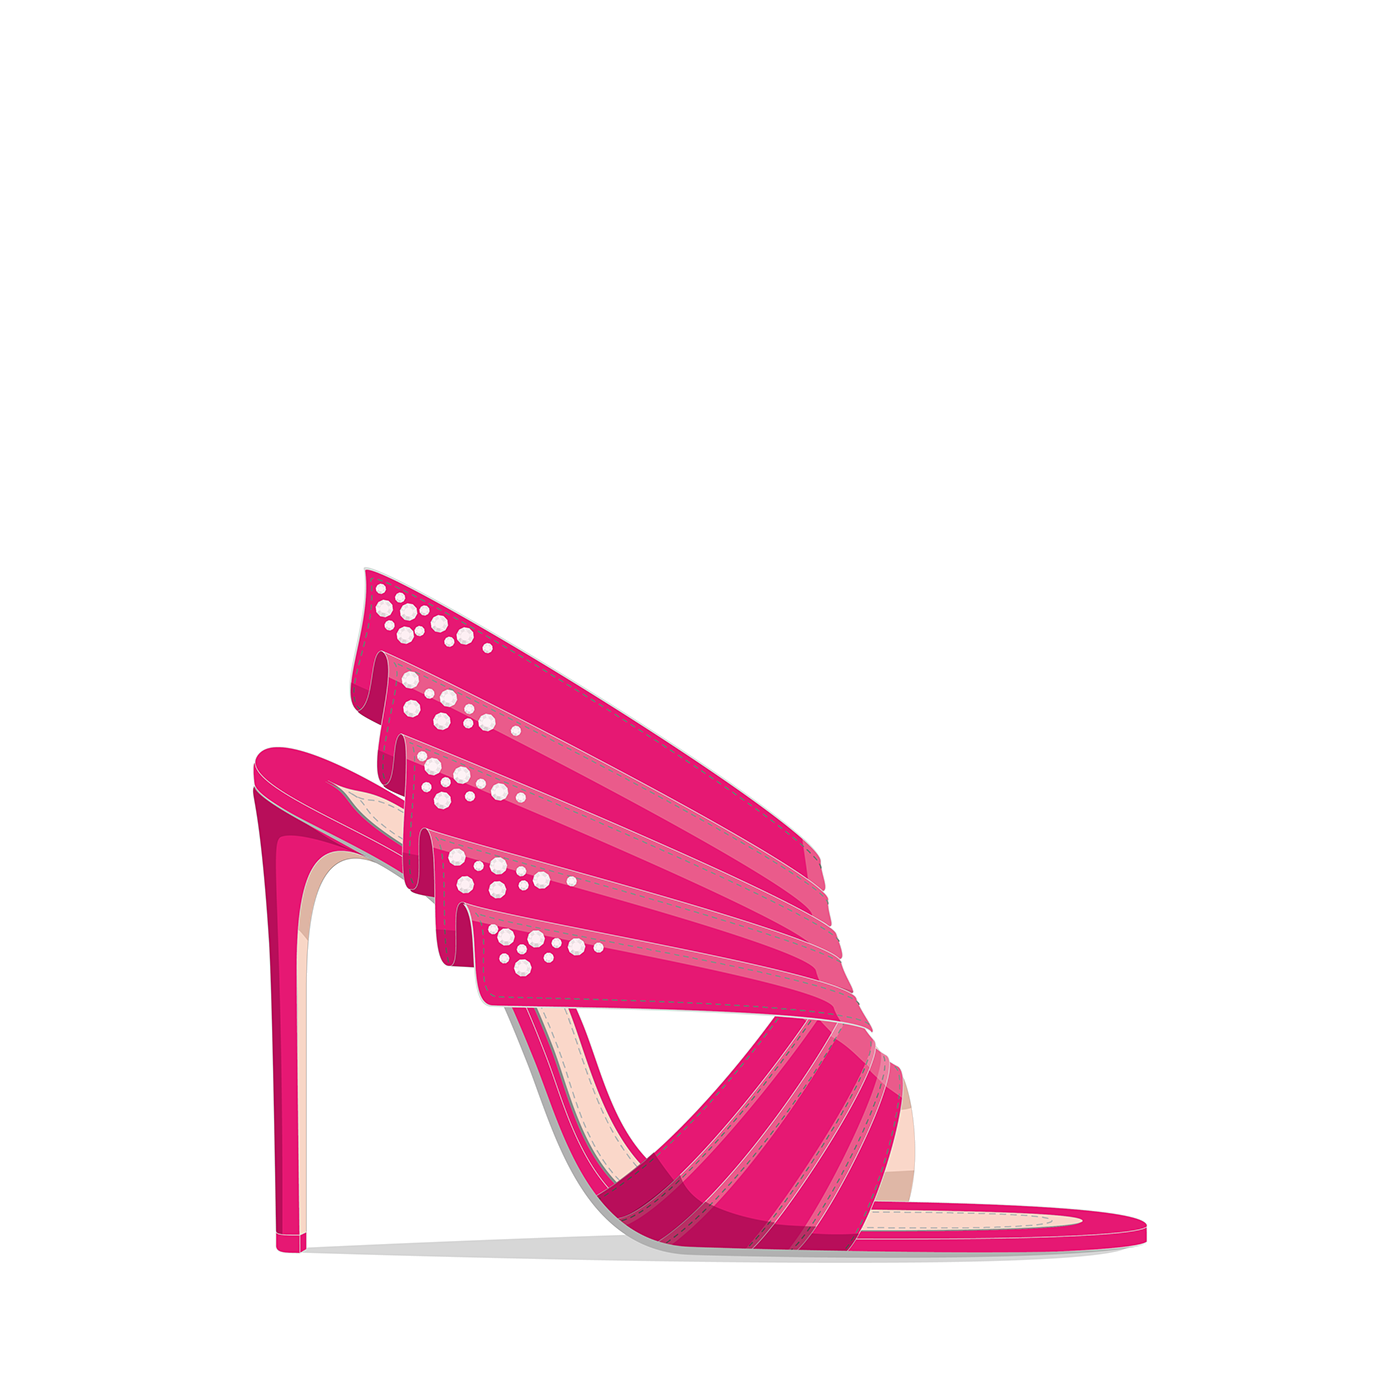 chaussures femme design Fashion  footwear footwear design Heels design Mode Style stylisme talon